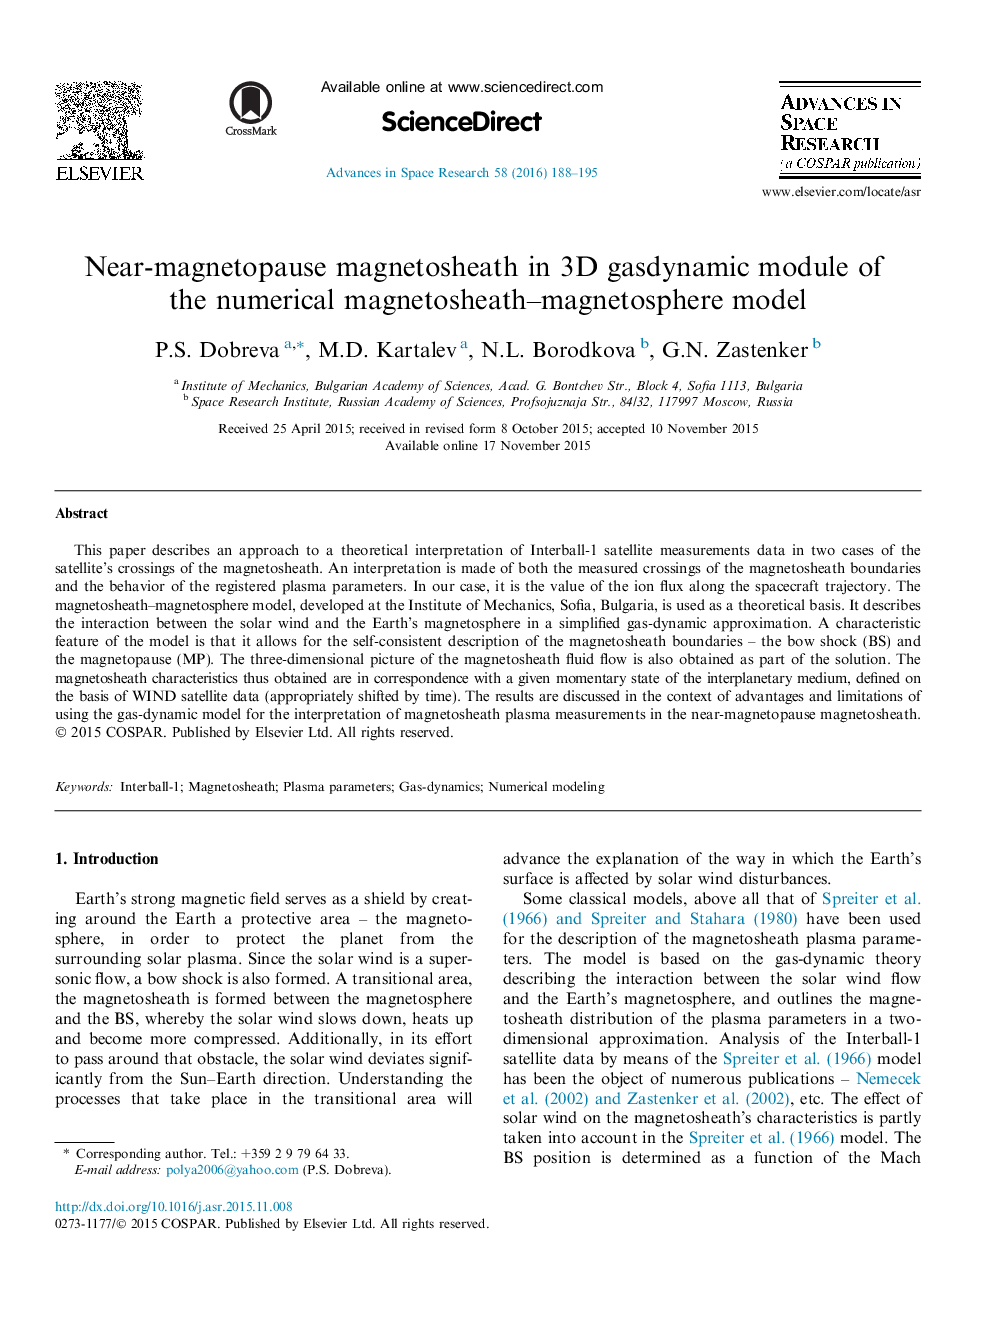 magnetosheath نزدیک magnetopause در ماژول gasdynamic سه بعدی از مدل magnetosheath-مگنتوسفر عددی